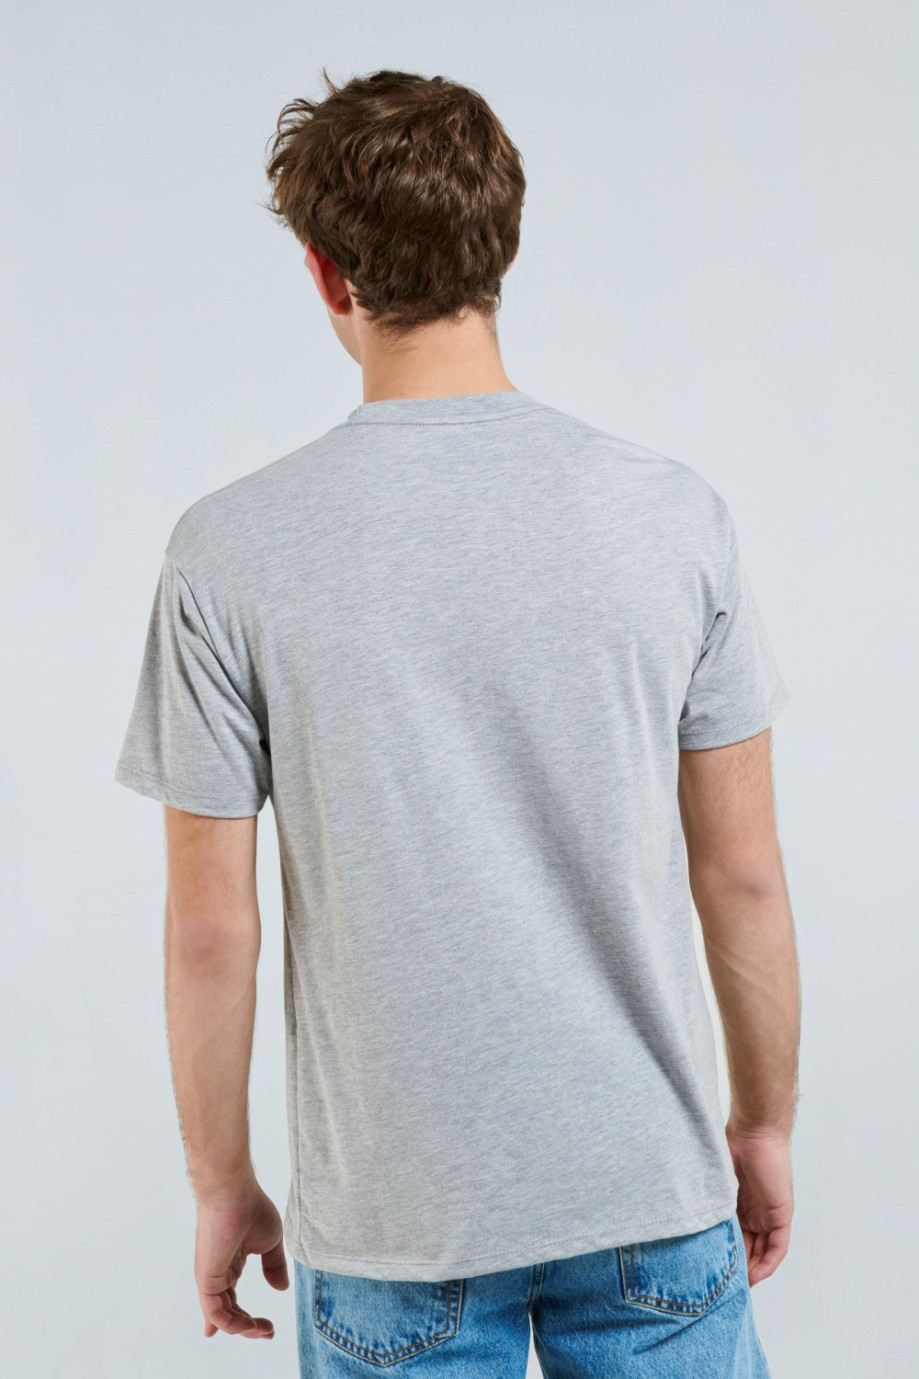 Camiseta manga corta gris claro con estampado en frente.